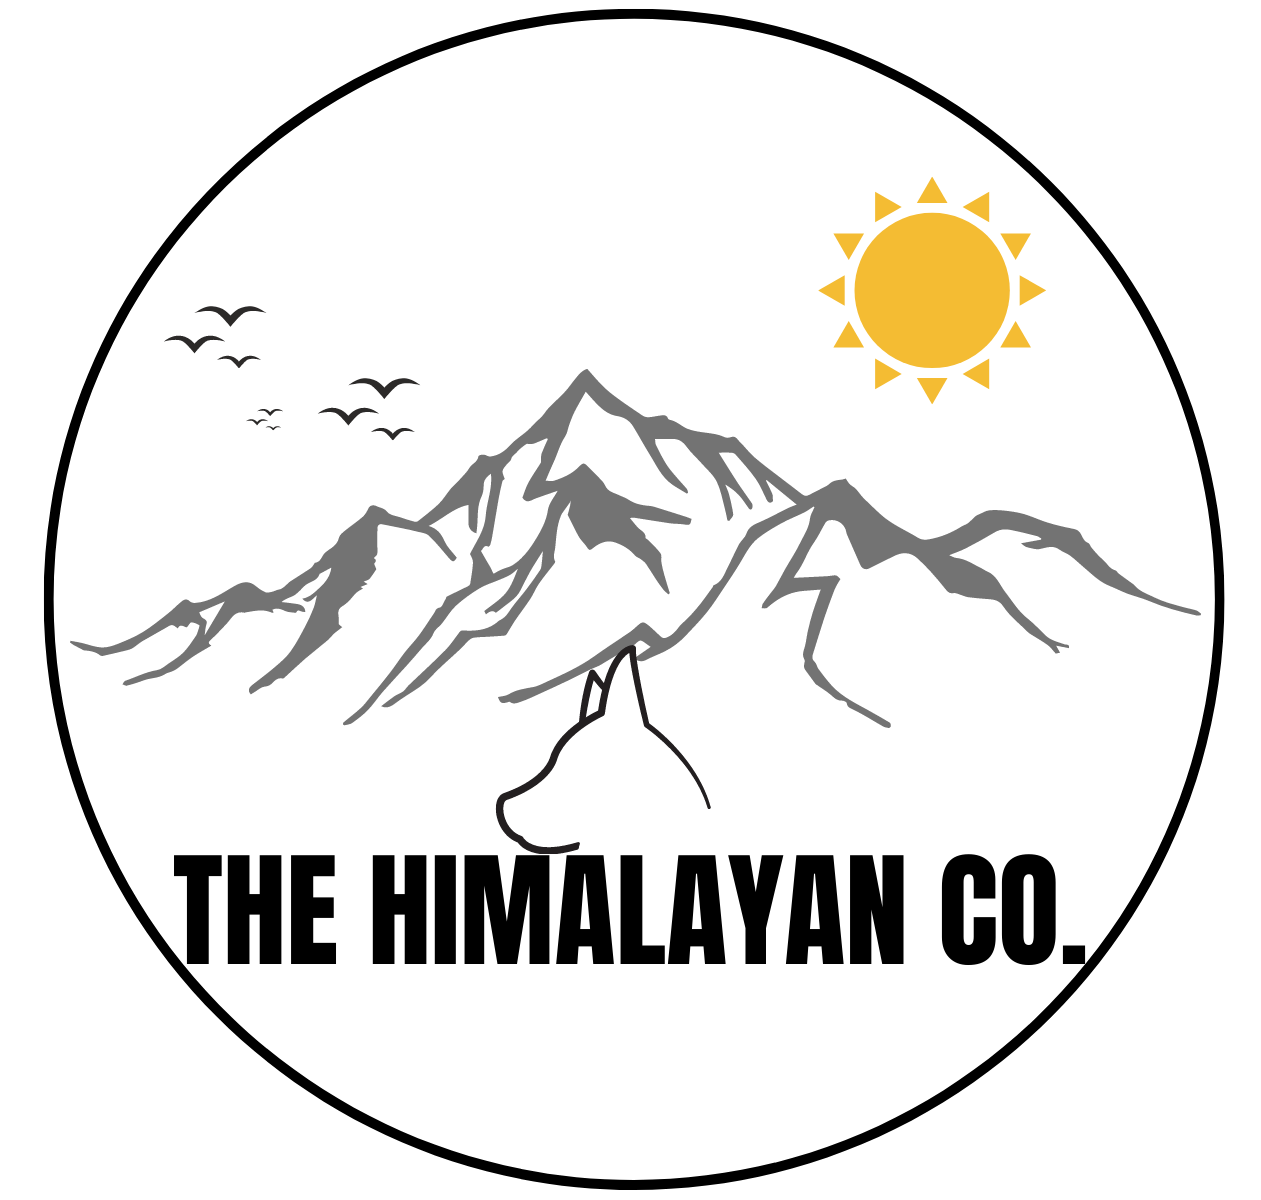 THE HIMALAYAN CO.